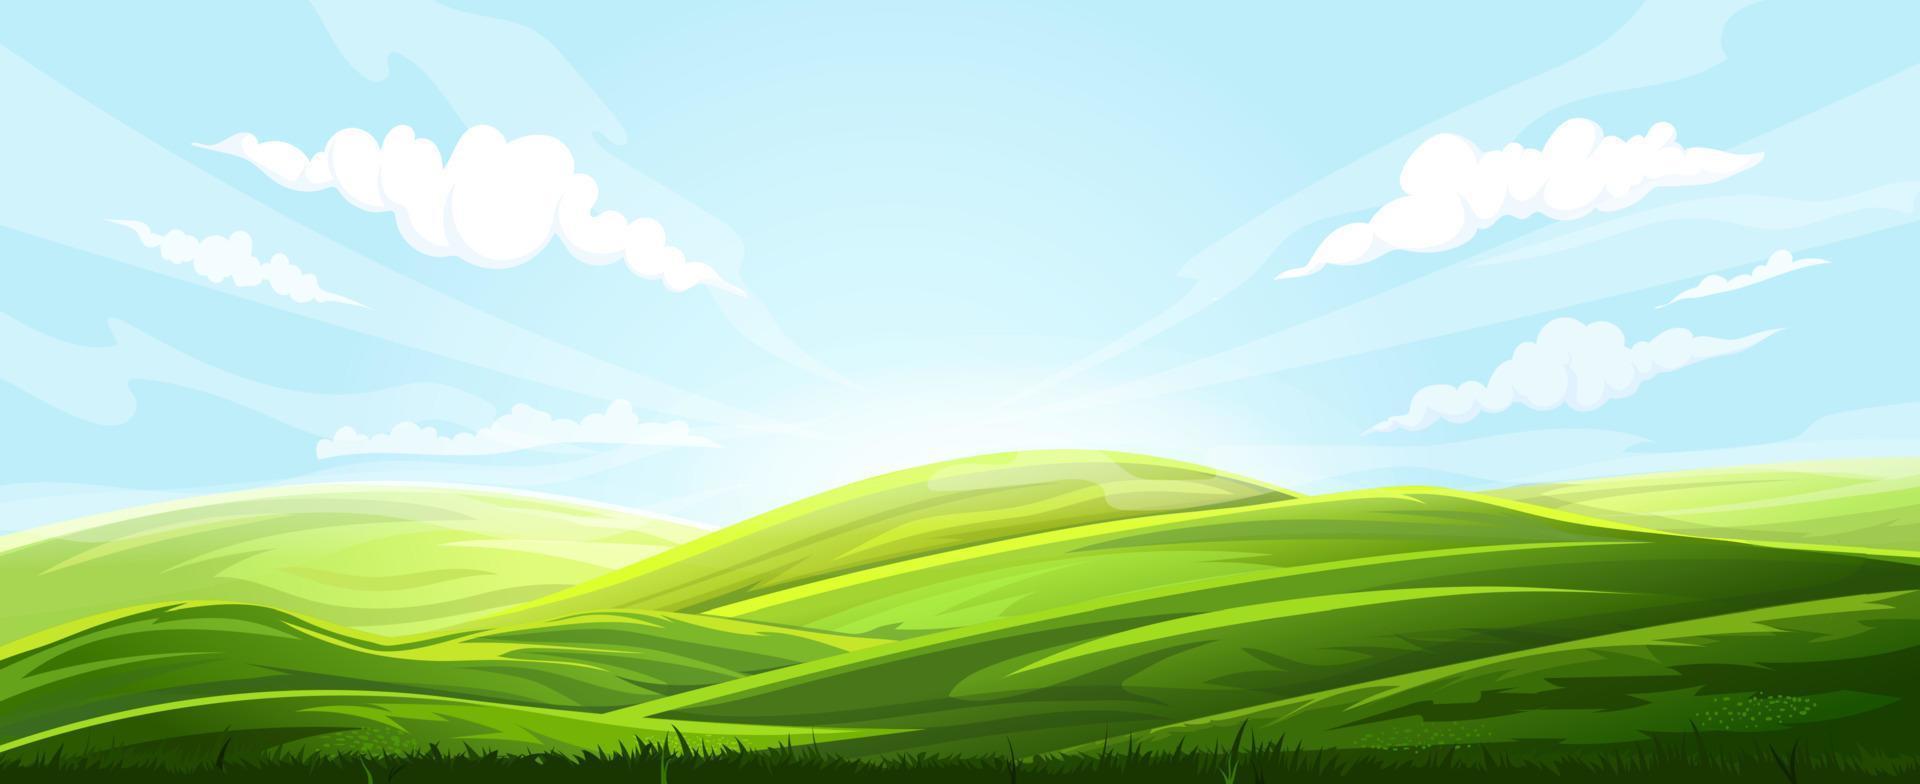 field background landscape vector